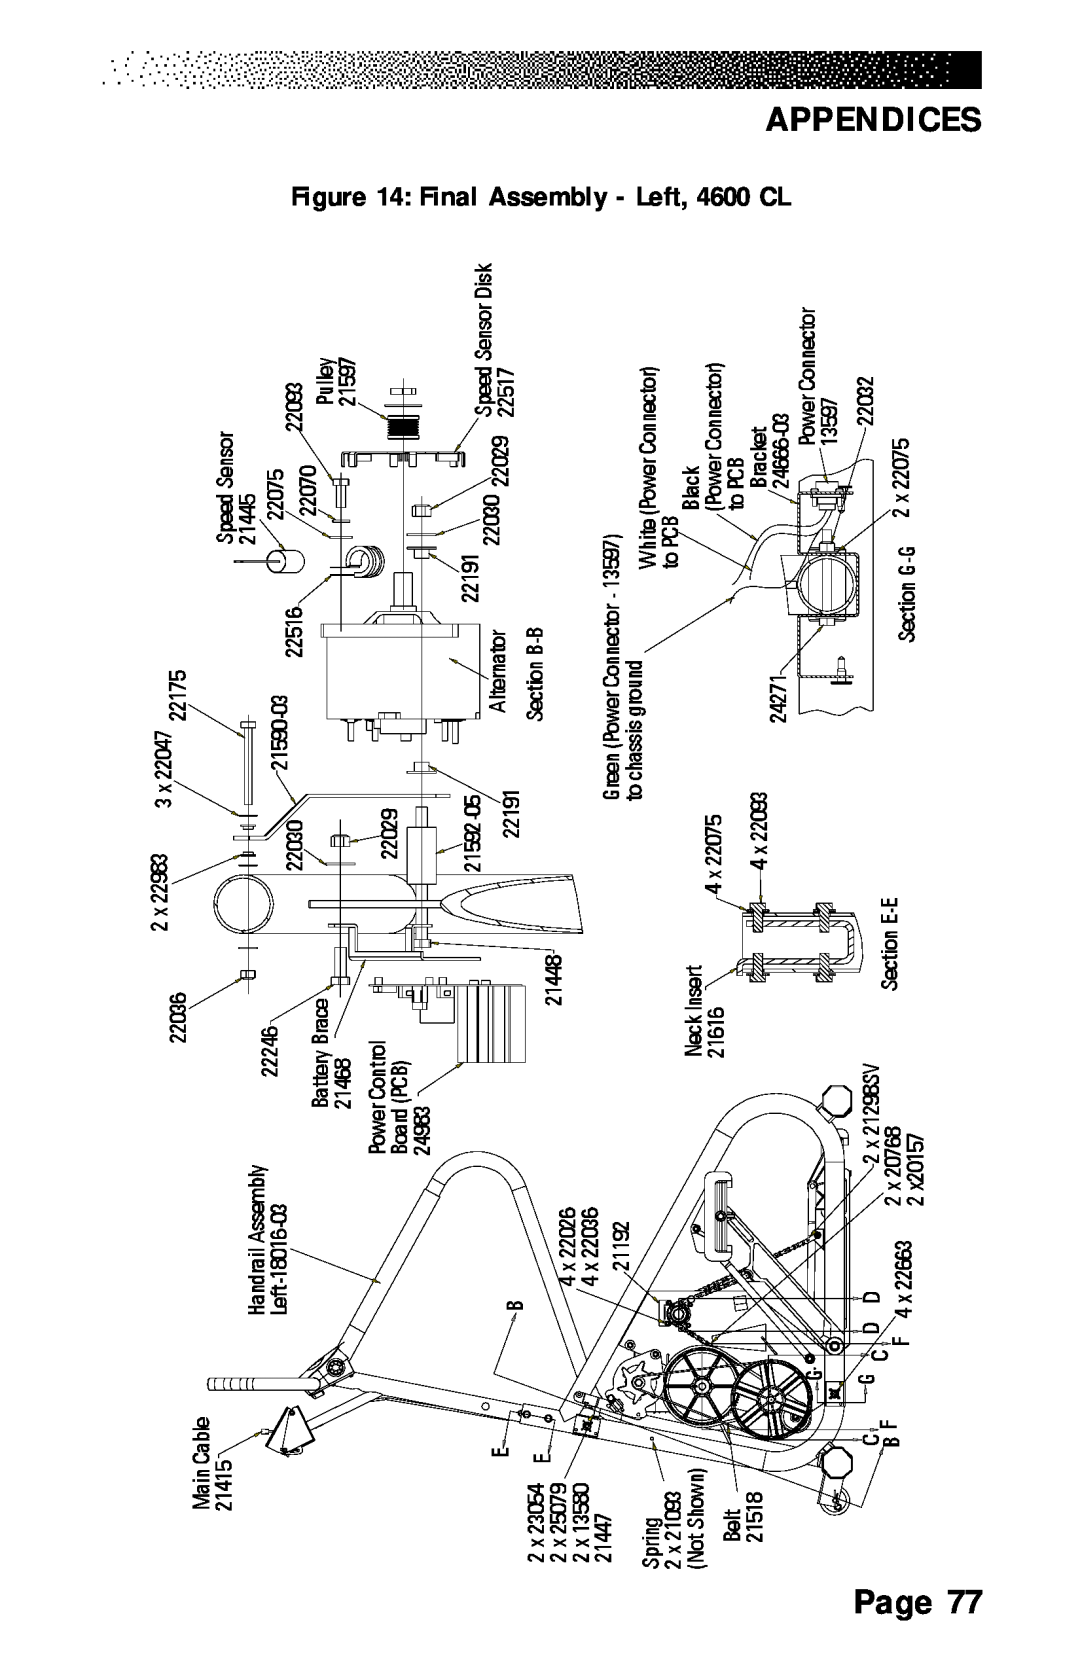 Stairmaster 4400 PT/CL, 4600 PT/CL, 4200 PT manual Final Assembly - Left, 4600 CL, Appendices, Page 